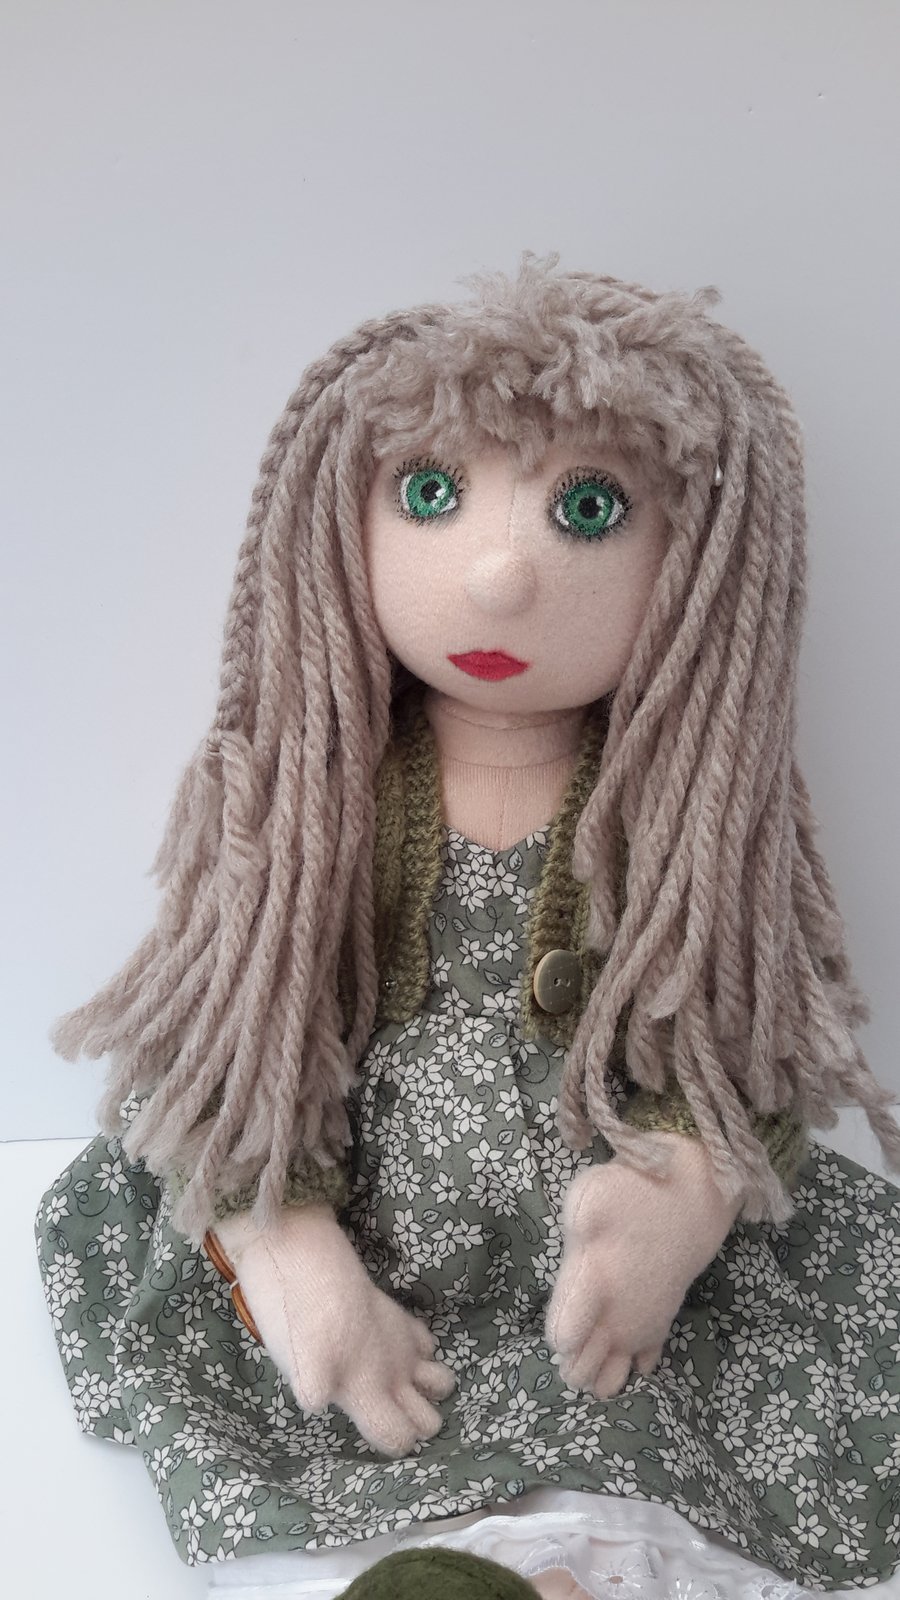 Abigail, 21" Handmade Cloth Doll, Collectable Rag Doll by Bearlescent, Keepsake 